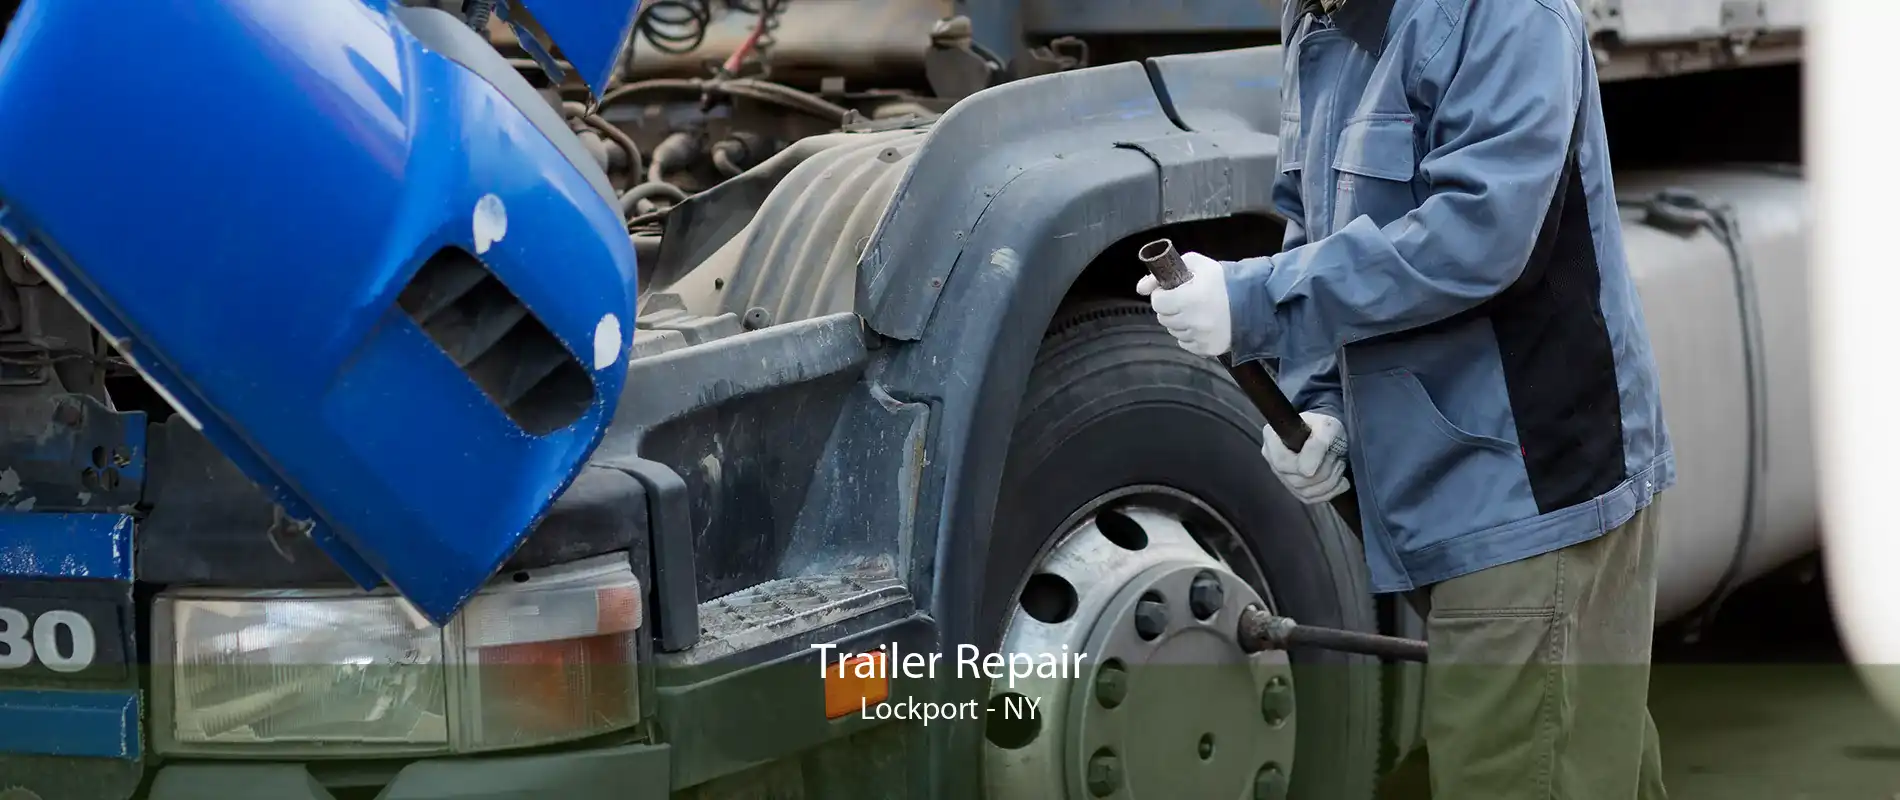 Trailer Repair Lockport - NY